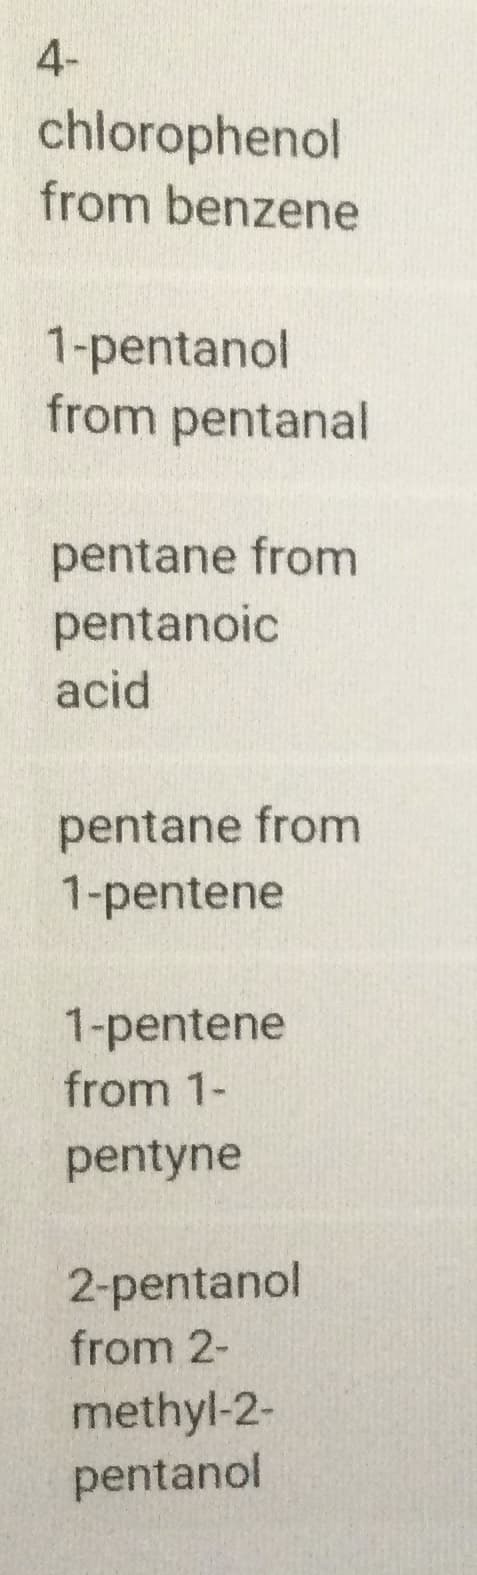 4-
chłorophenol
from benzene
1-pentanol
from pentanal
pentane from
pentanoic
acid
pentane from
1-pentene
1-pentene
from 1-
pentyne
2-pentanol
from 2-
methyl-2-
pentanol
